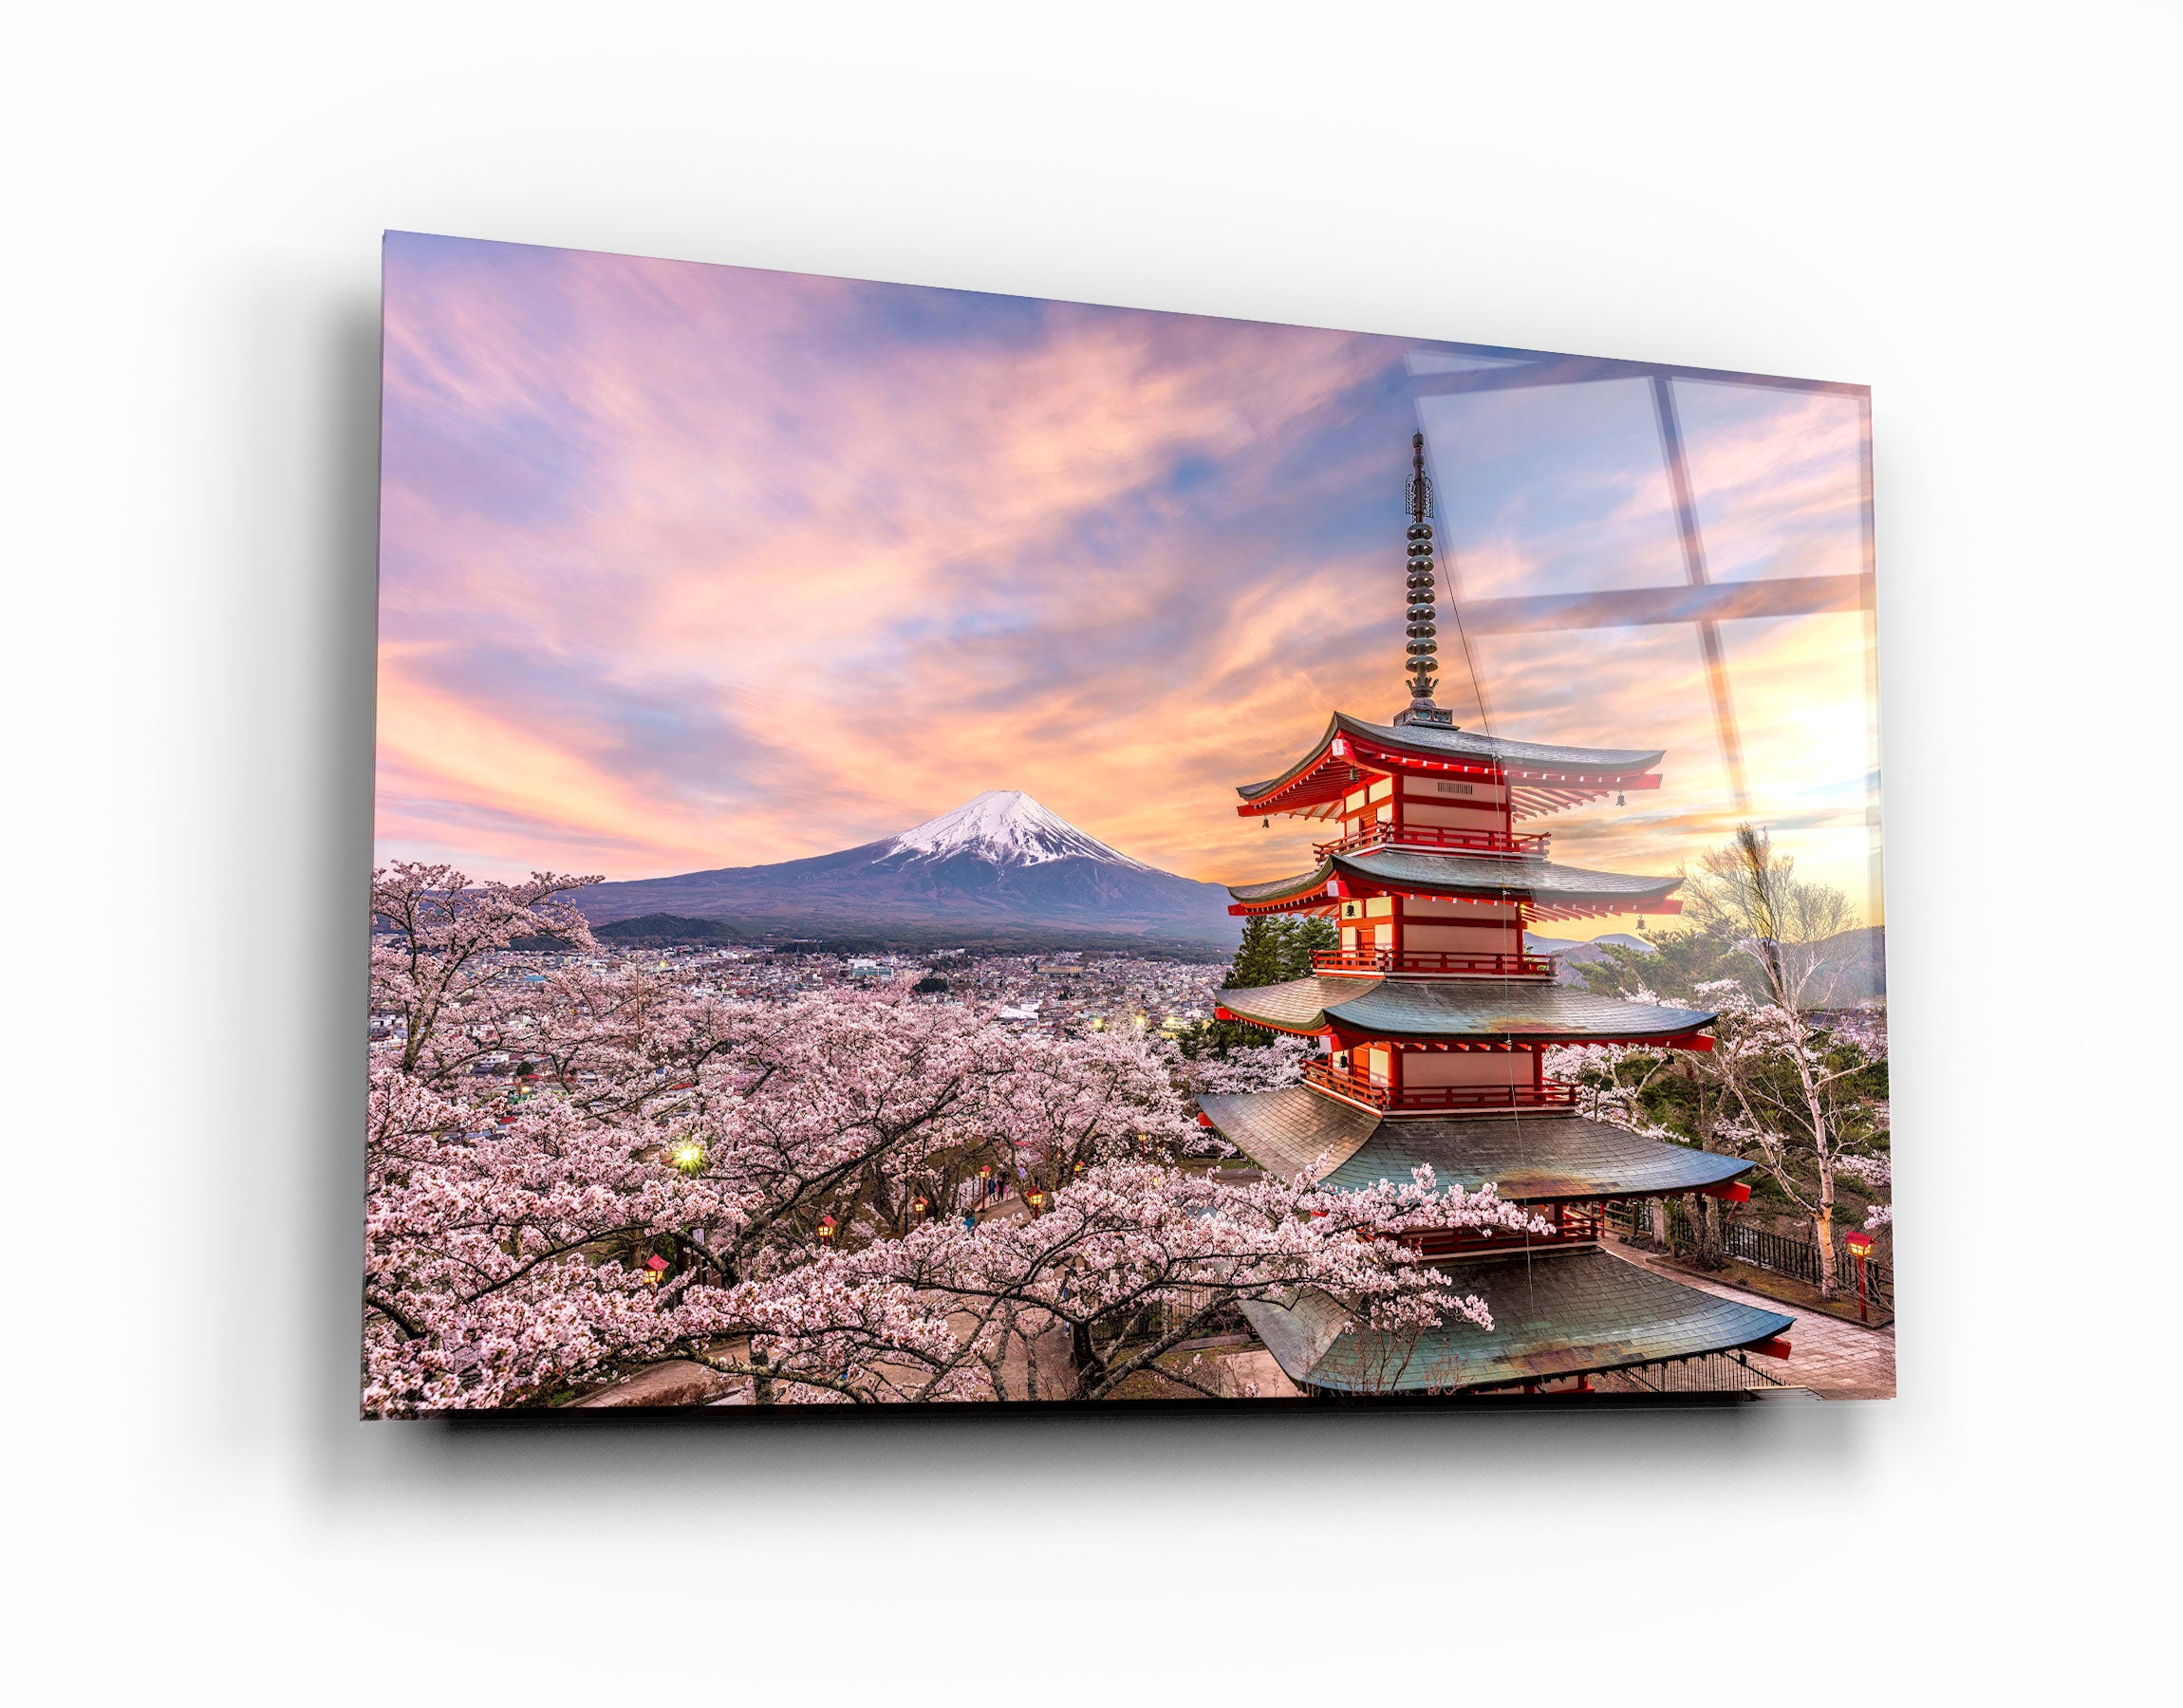 ・"Fujiyoshida, Japan at Chureito Pagoda and Mt. Fuji in the spring with cherry blossoms"・Glass Wall Art